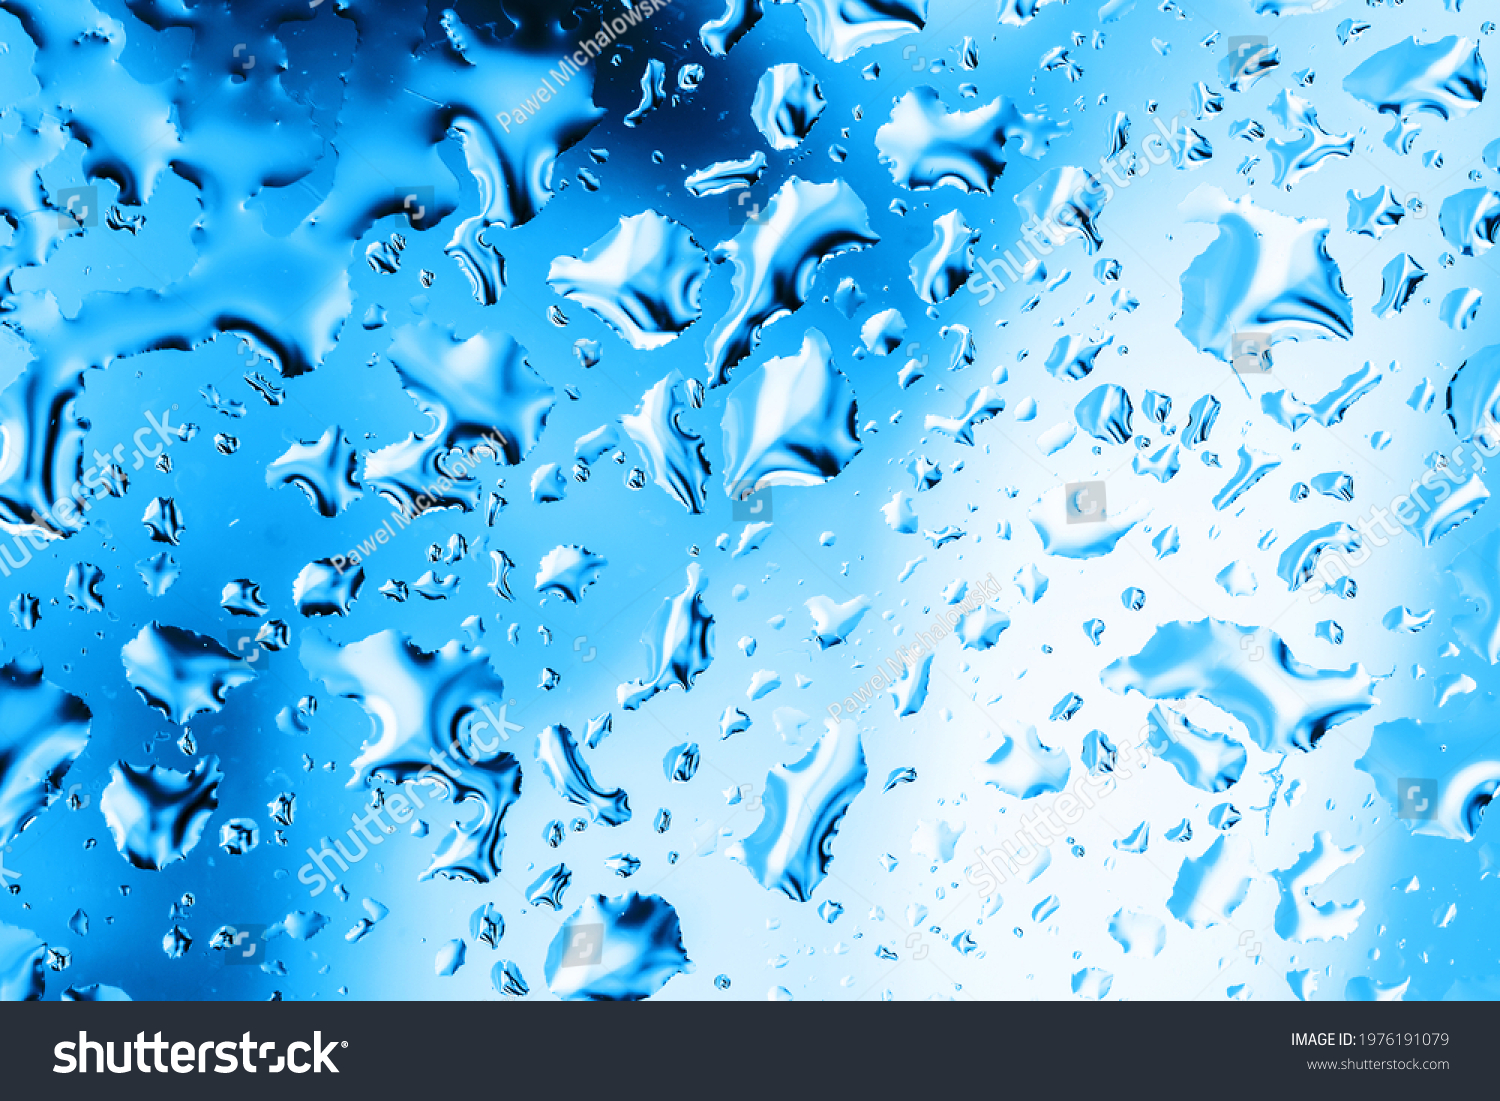 Rain window background. Water drops background. Wet glass surface texture. Bubble dew pattern. Transparent window blue raindrops. Bright white environment condensation texture. #1976191079